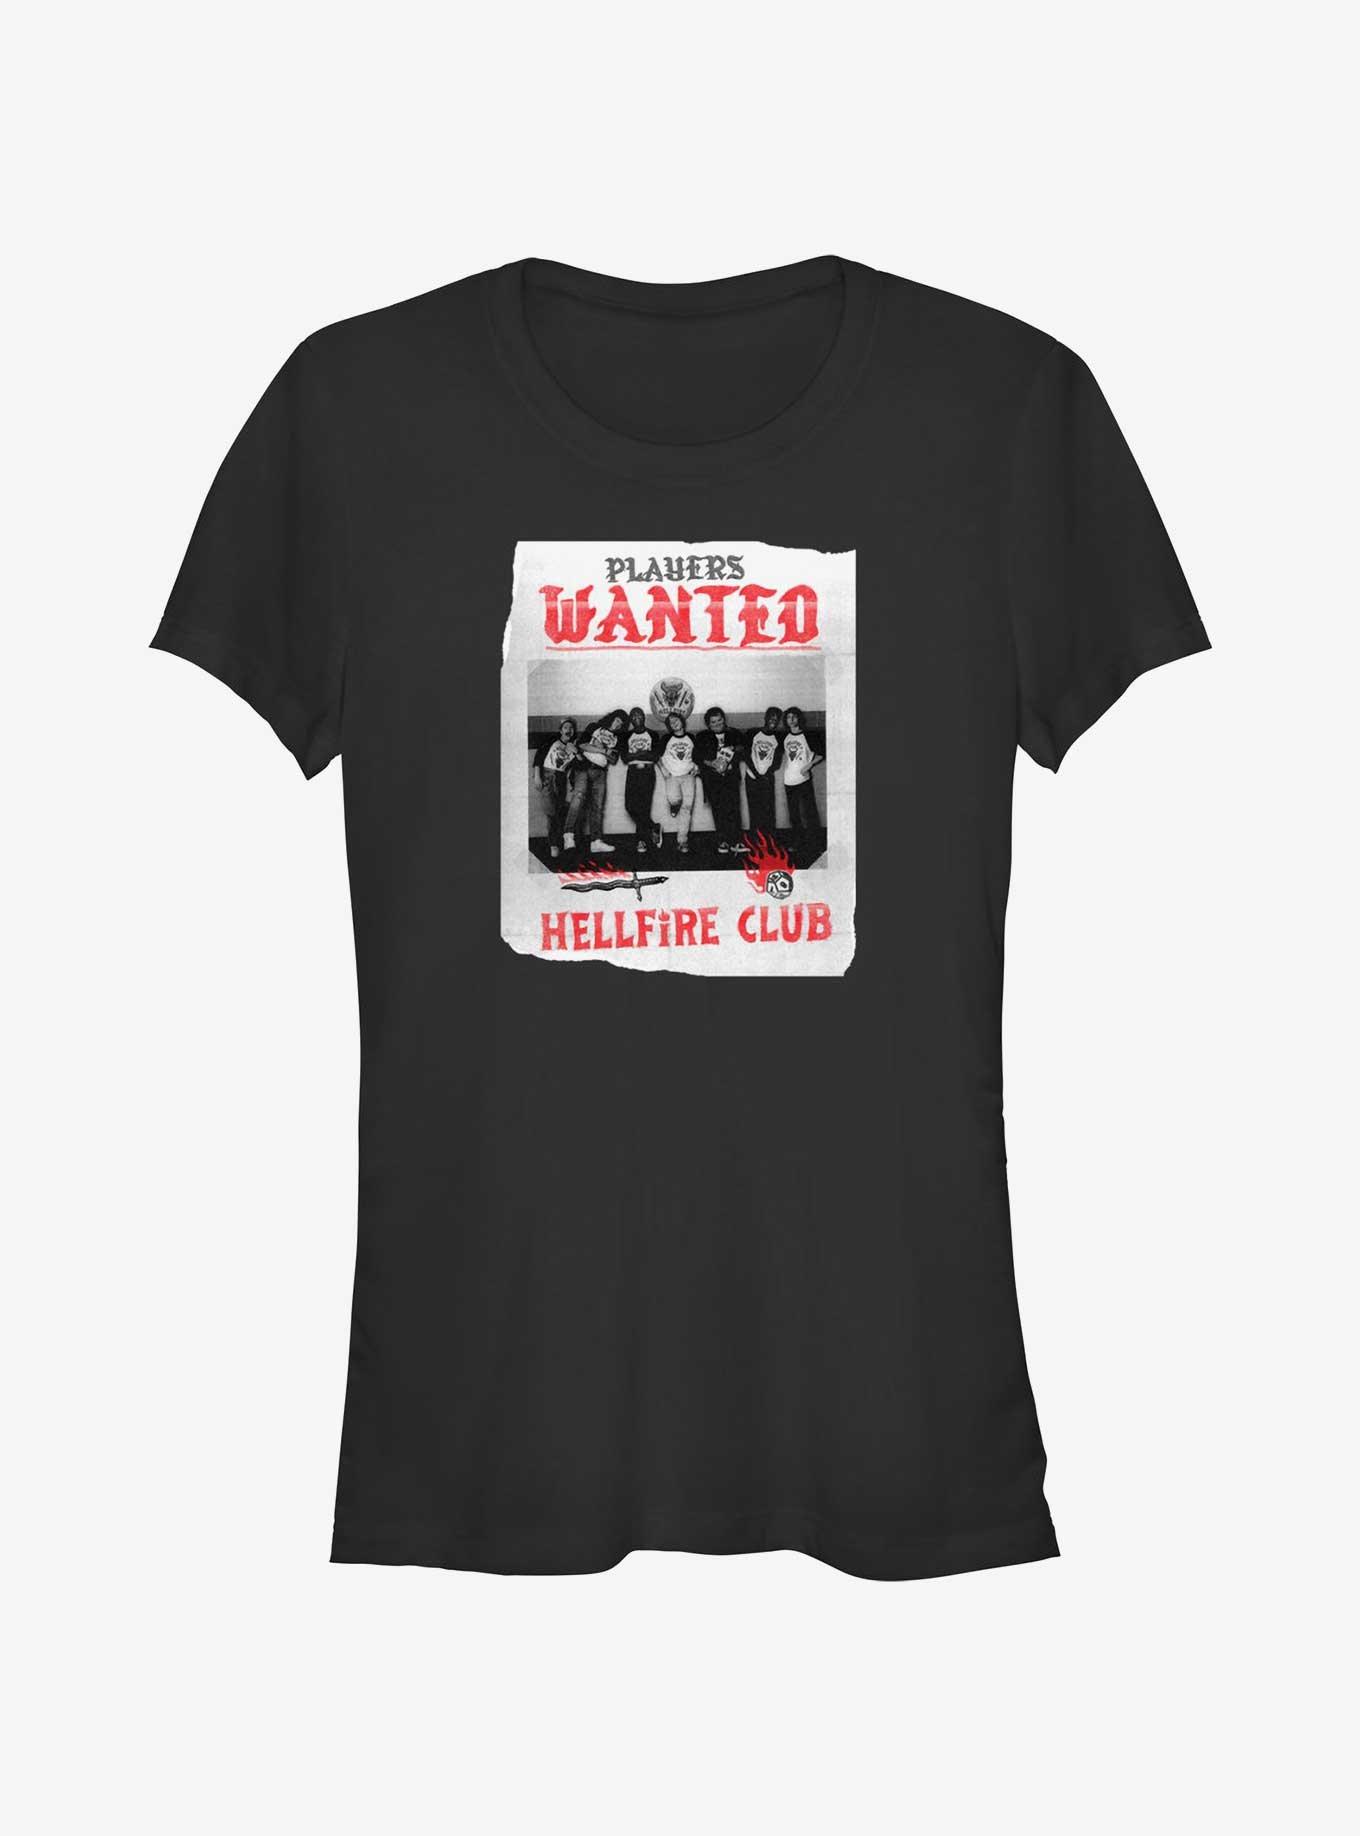 Stranger Things Hellfire Club Players Wanted Poster Girls T-Shirt, BLACK, hi-res